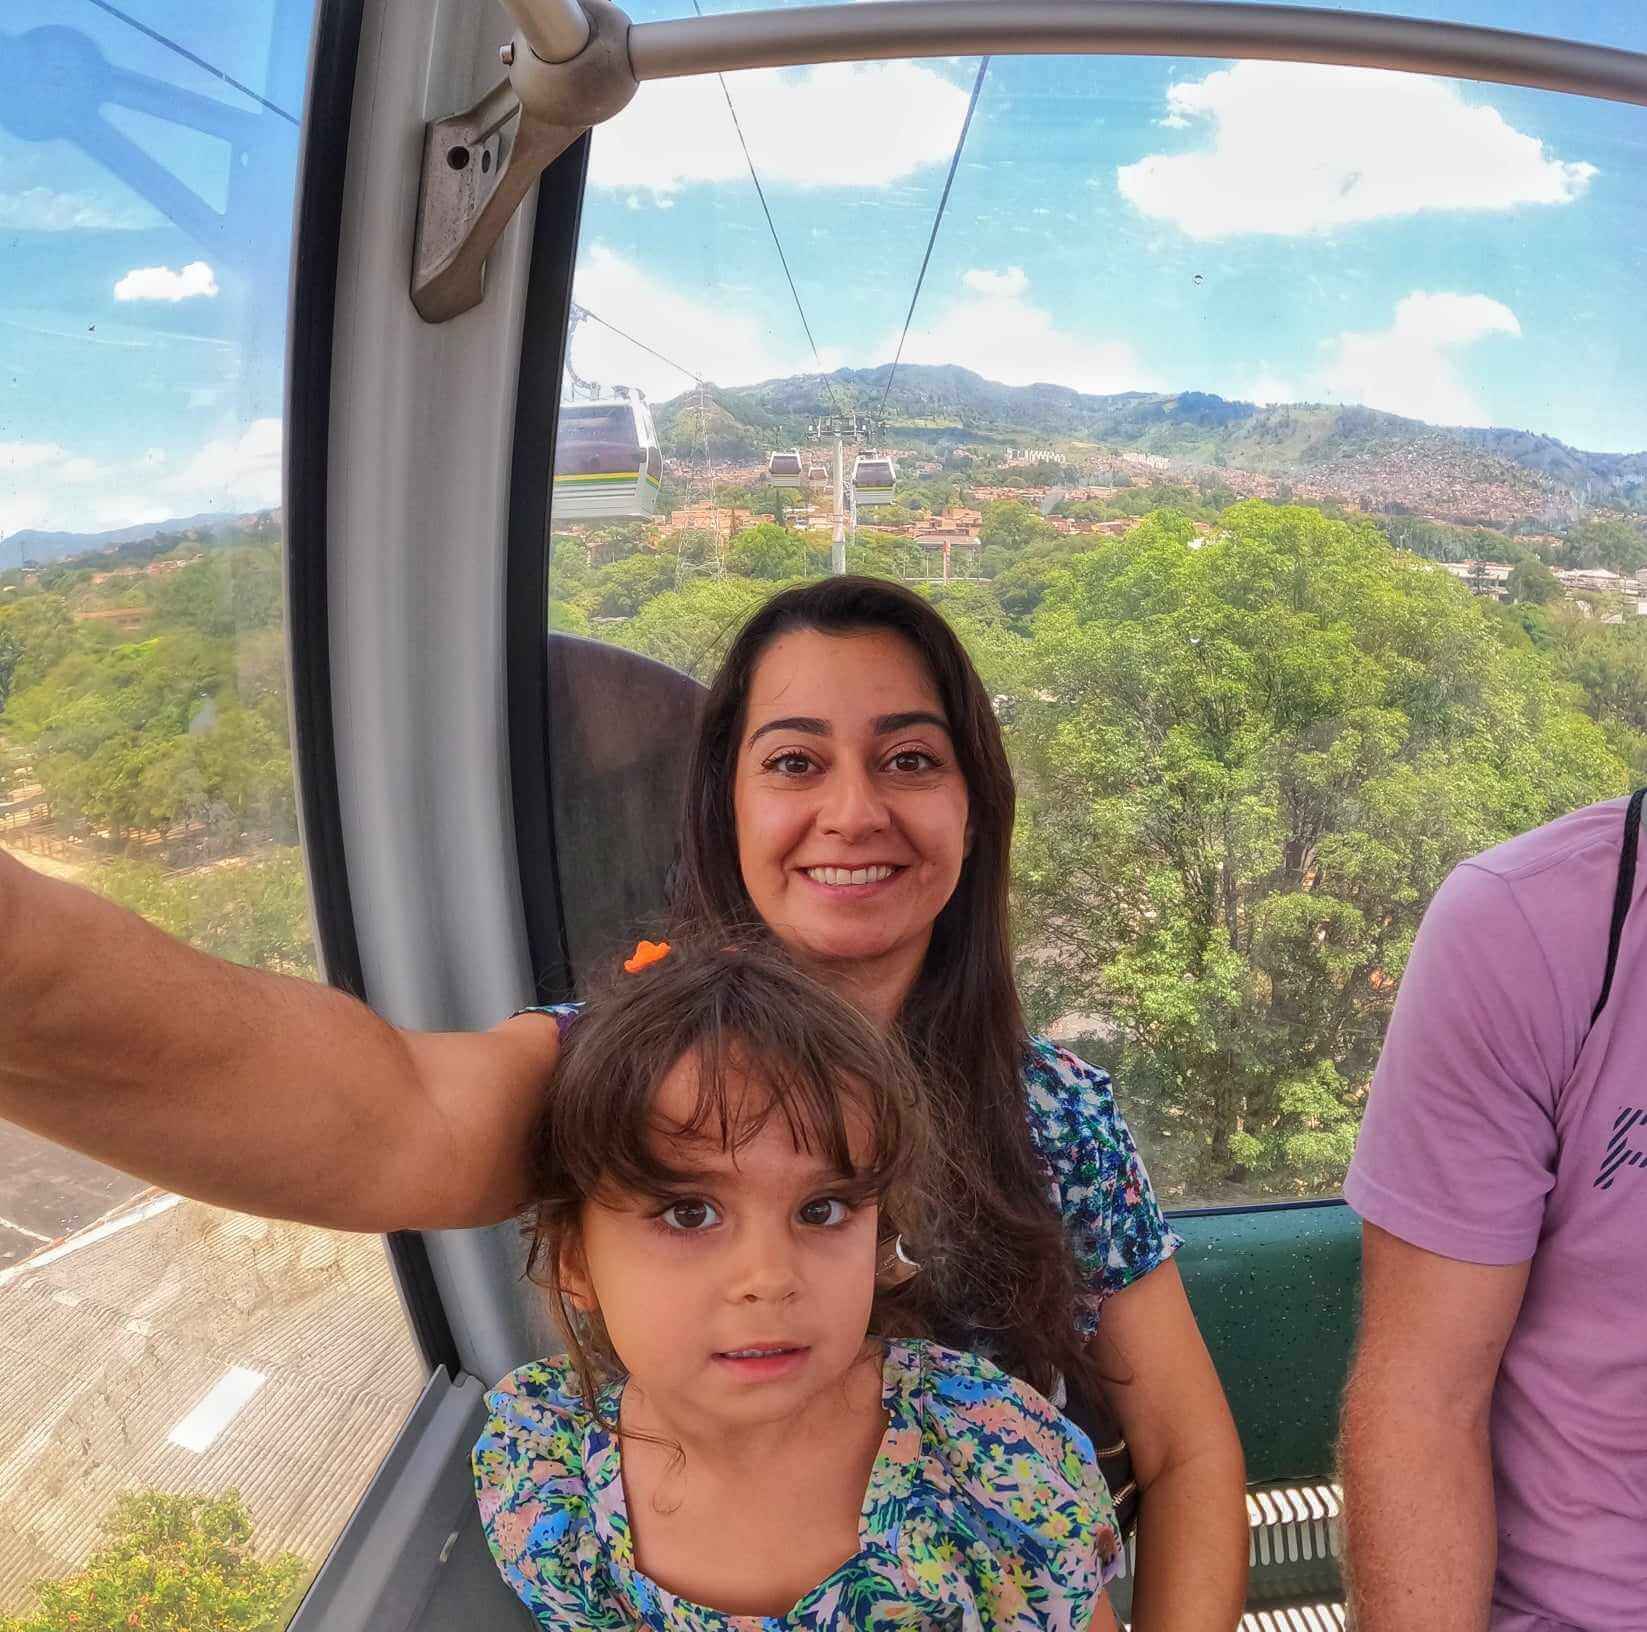 Metrocable ride in Medellin